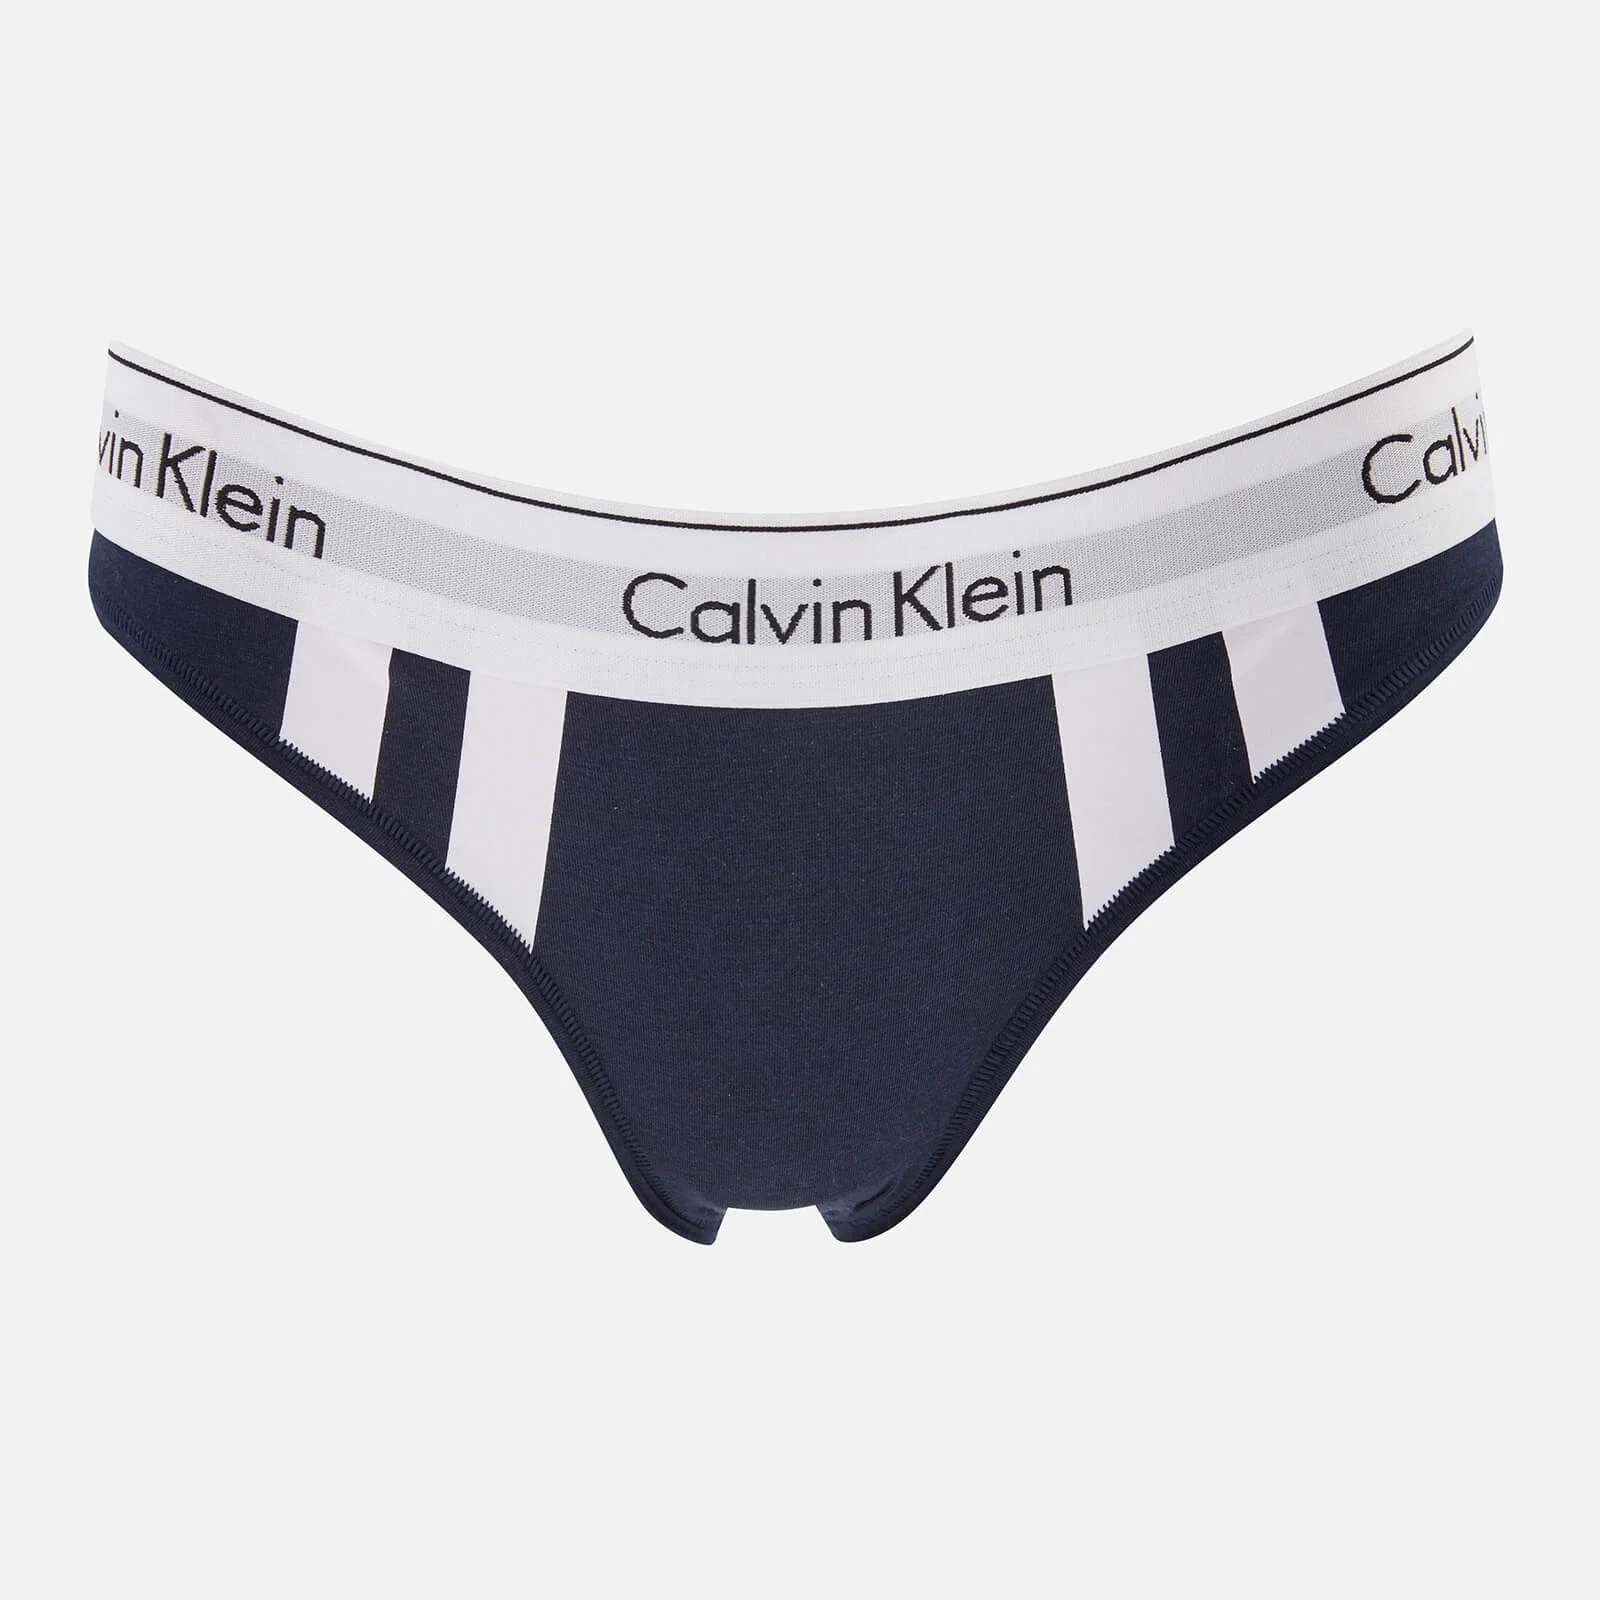 Calvin Klein Women's Varsity Stripe Bikini Brief - Navy Image 1